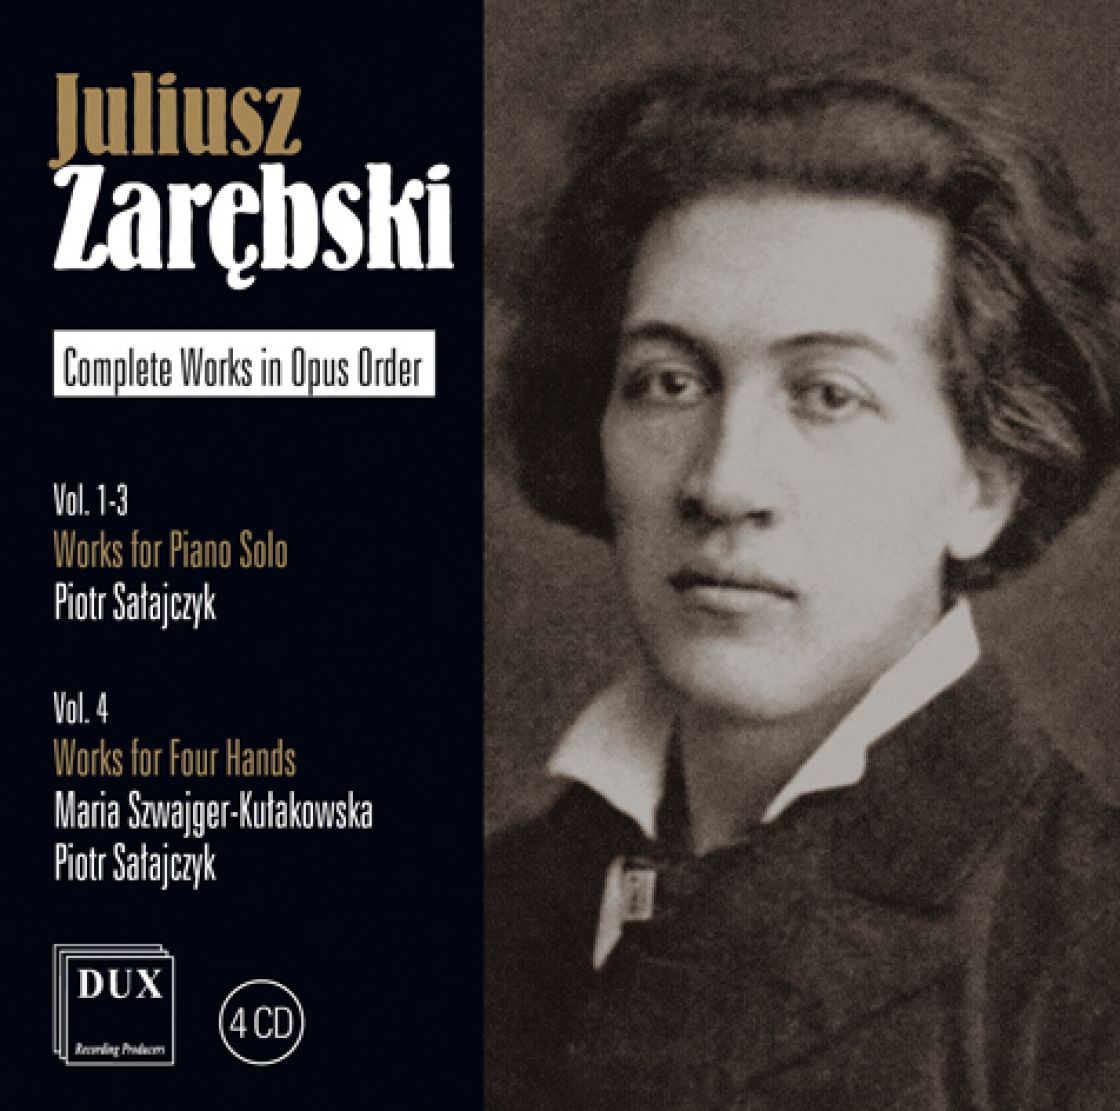 Juliusz Zarębski - Complete Works in Opus Order